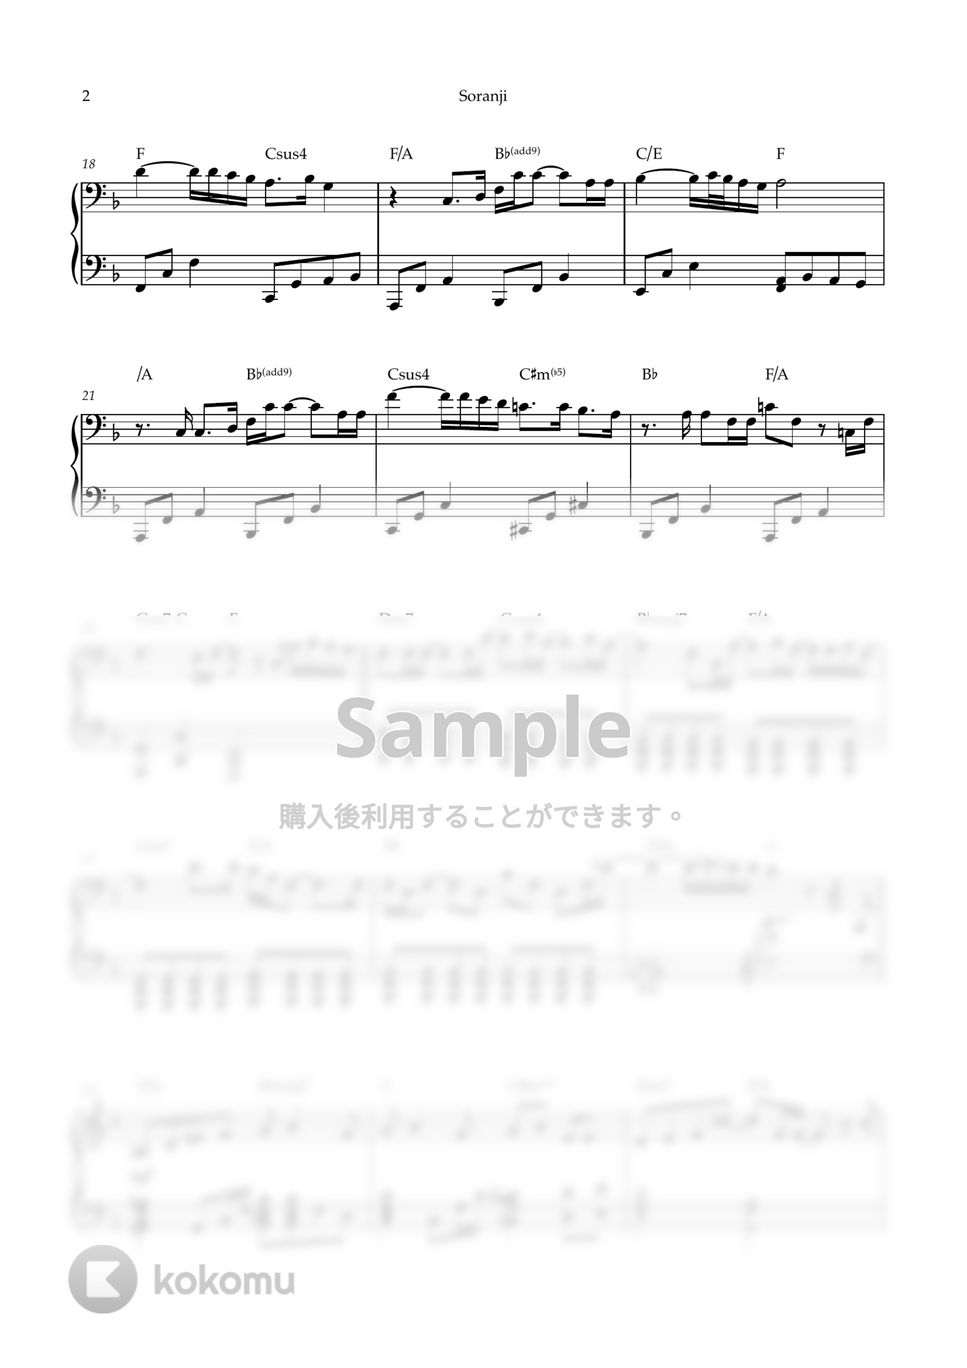 Mrs. GREEN APPLE - Soranji (ピアノ・ソロ/ラーゲリより愛を込めて) by kanapiano